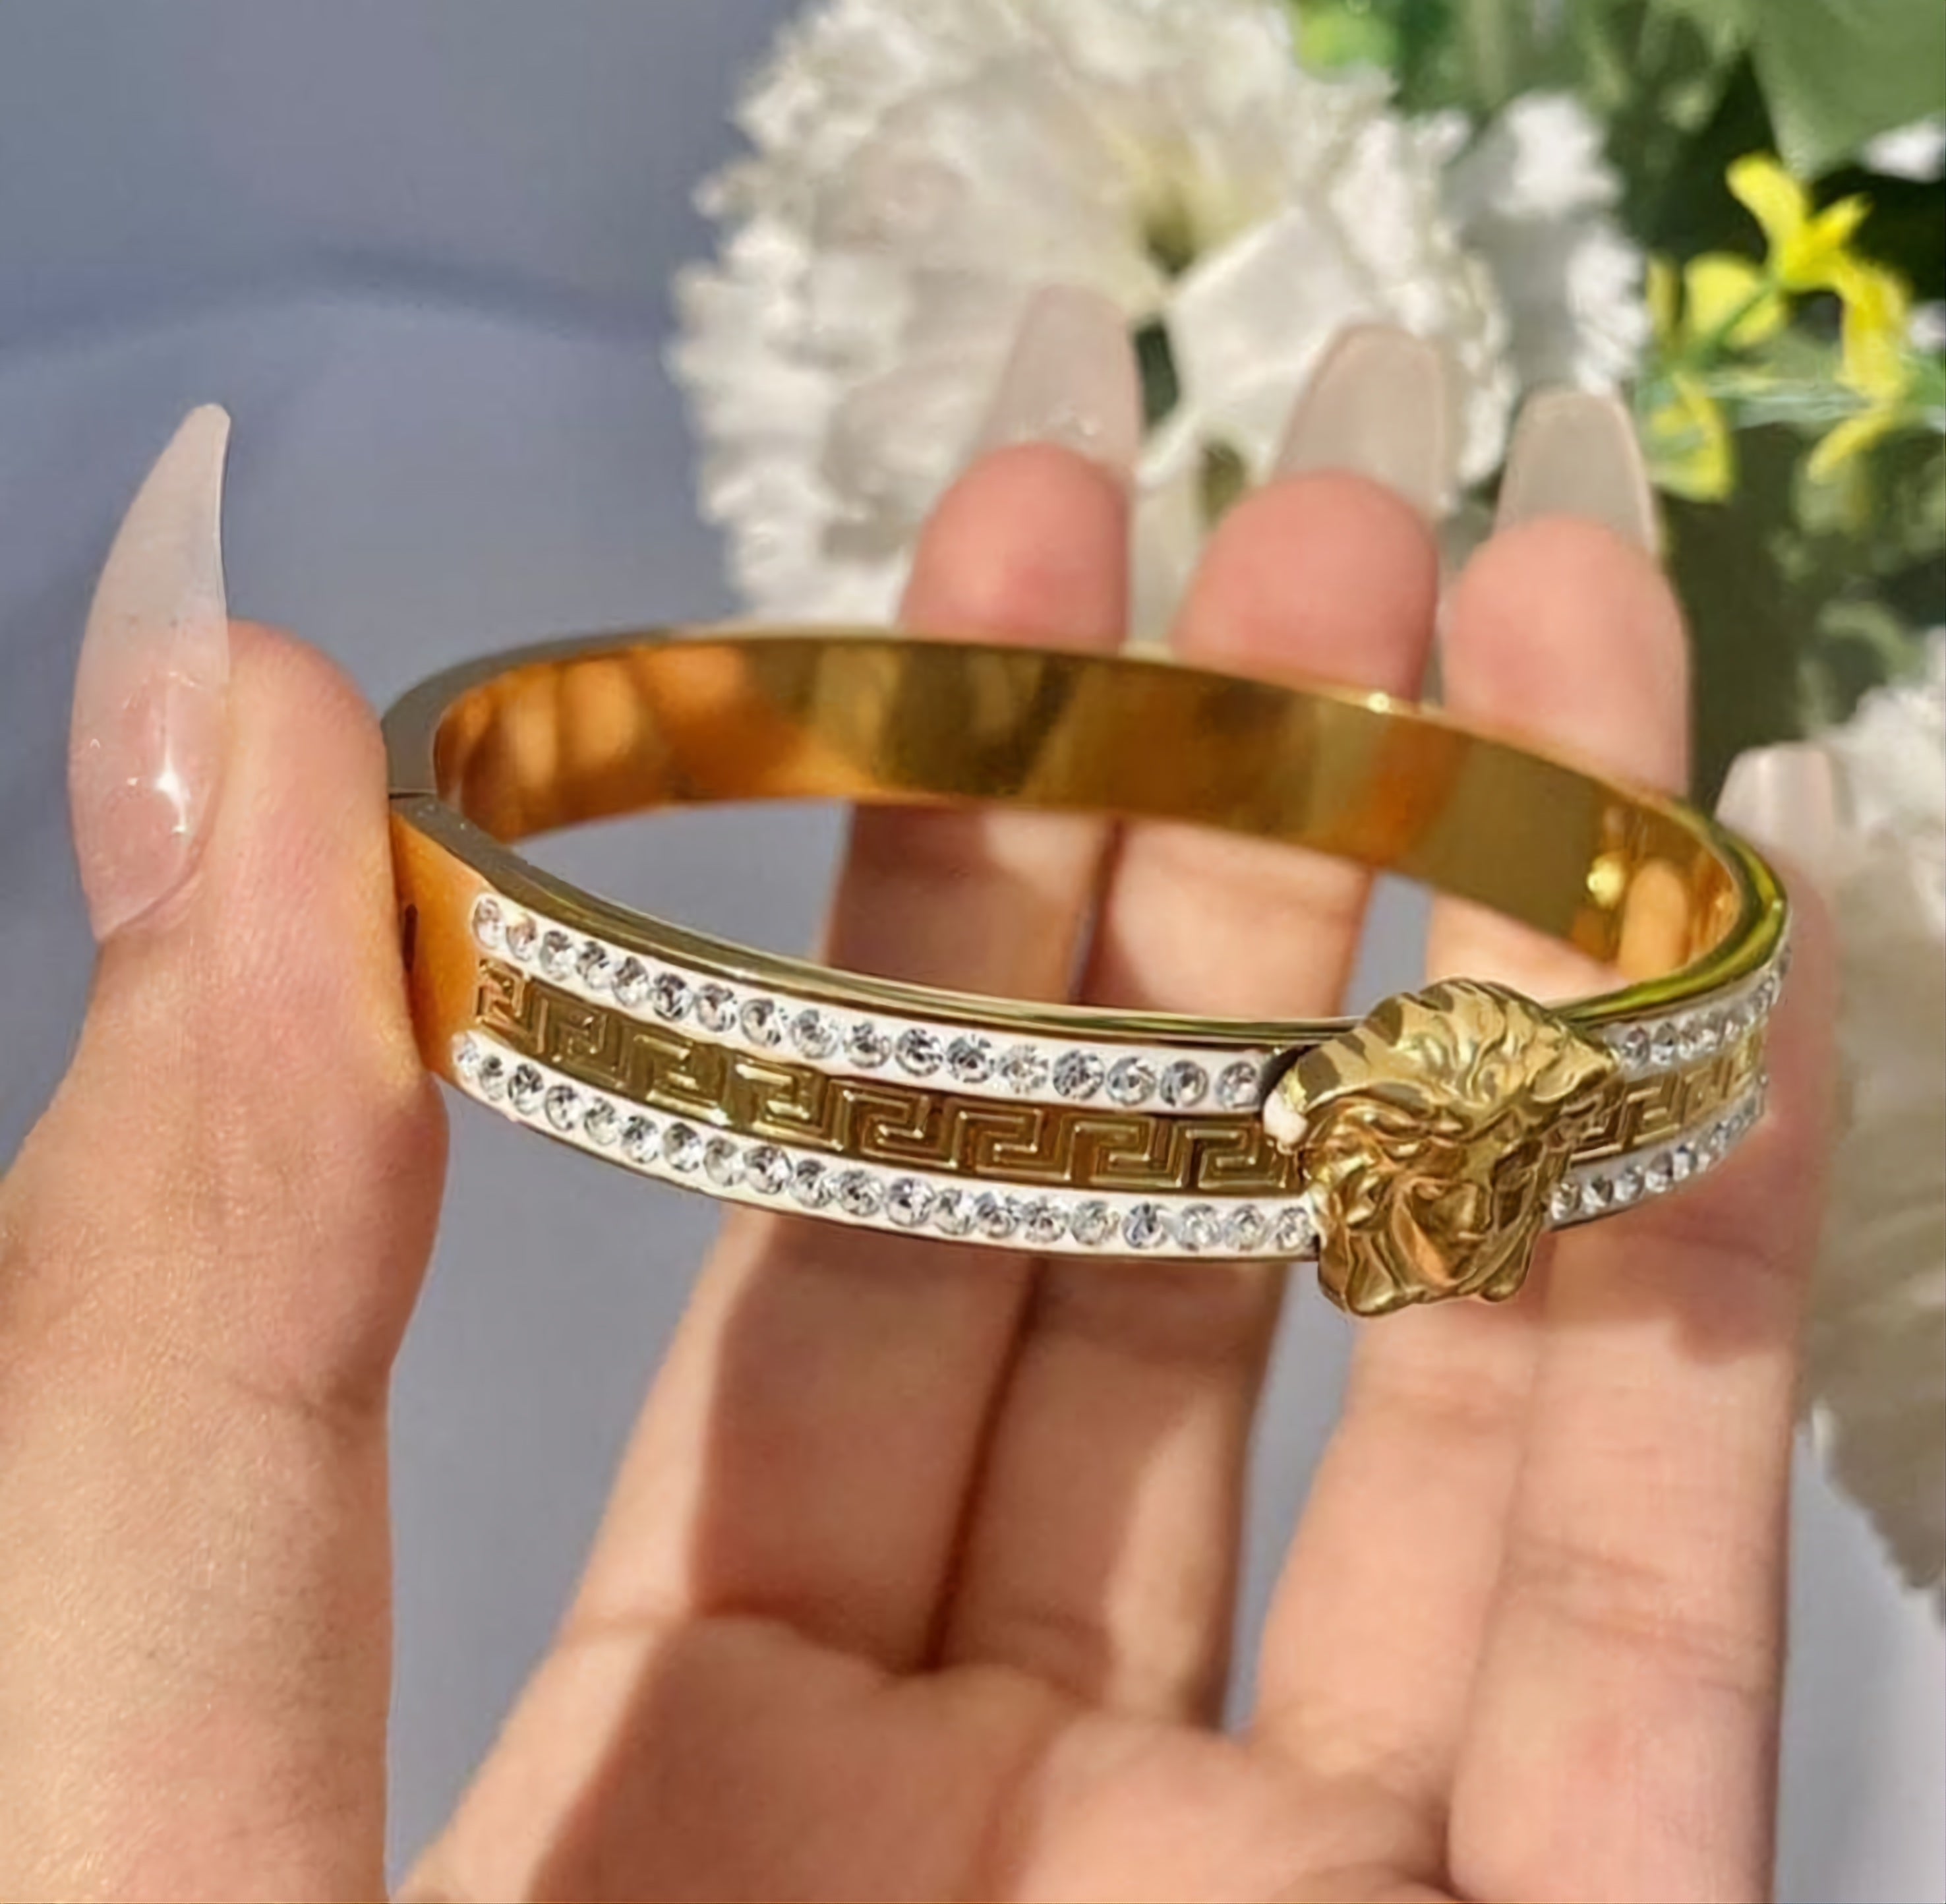 Versace Women's Crystal Versace Tiles Bracelet in Gold | Versace US |  Fashion bracelets jewelry, Versace jewelry, Womens fashion accessories